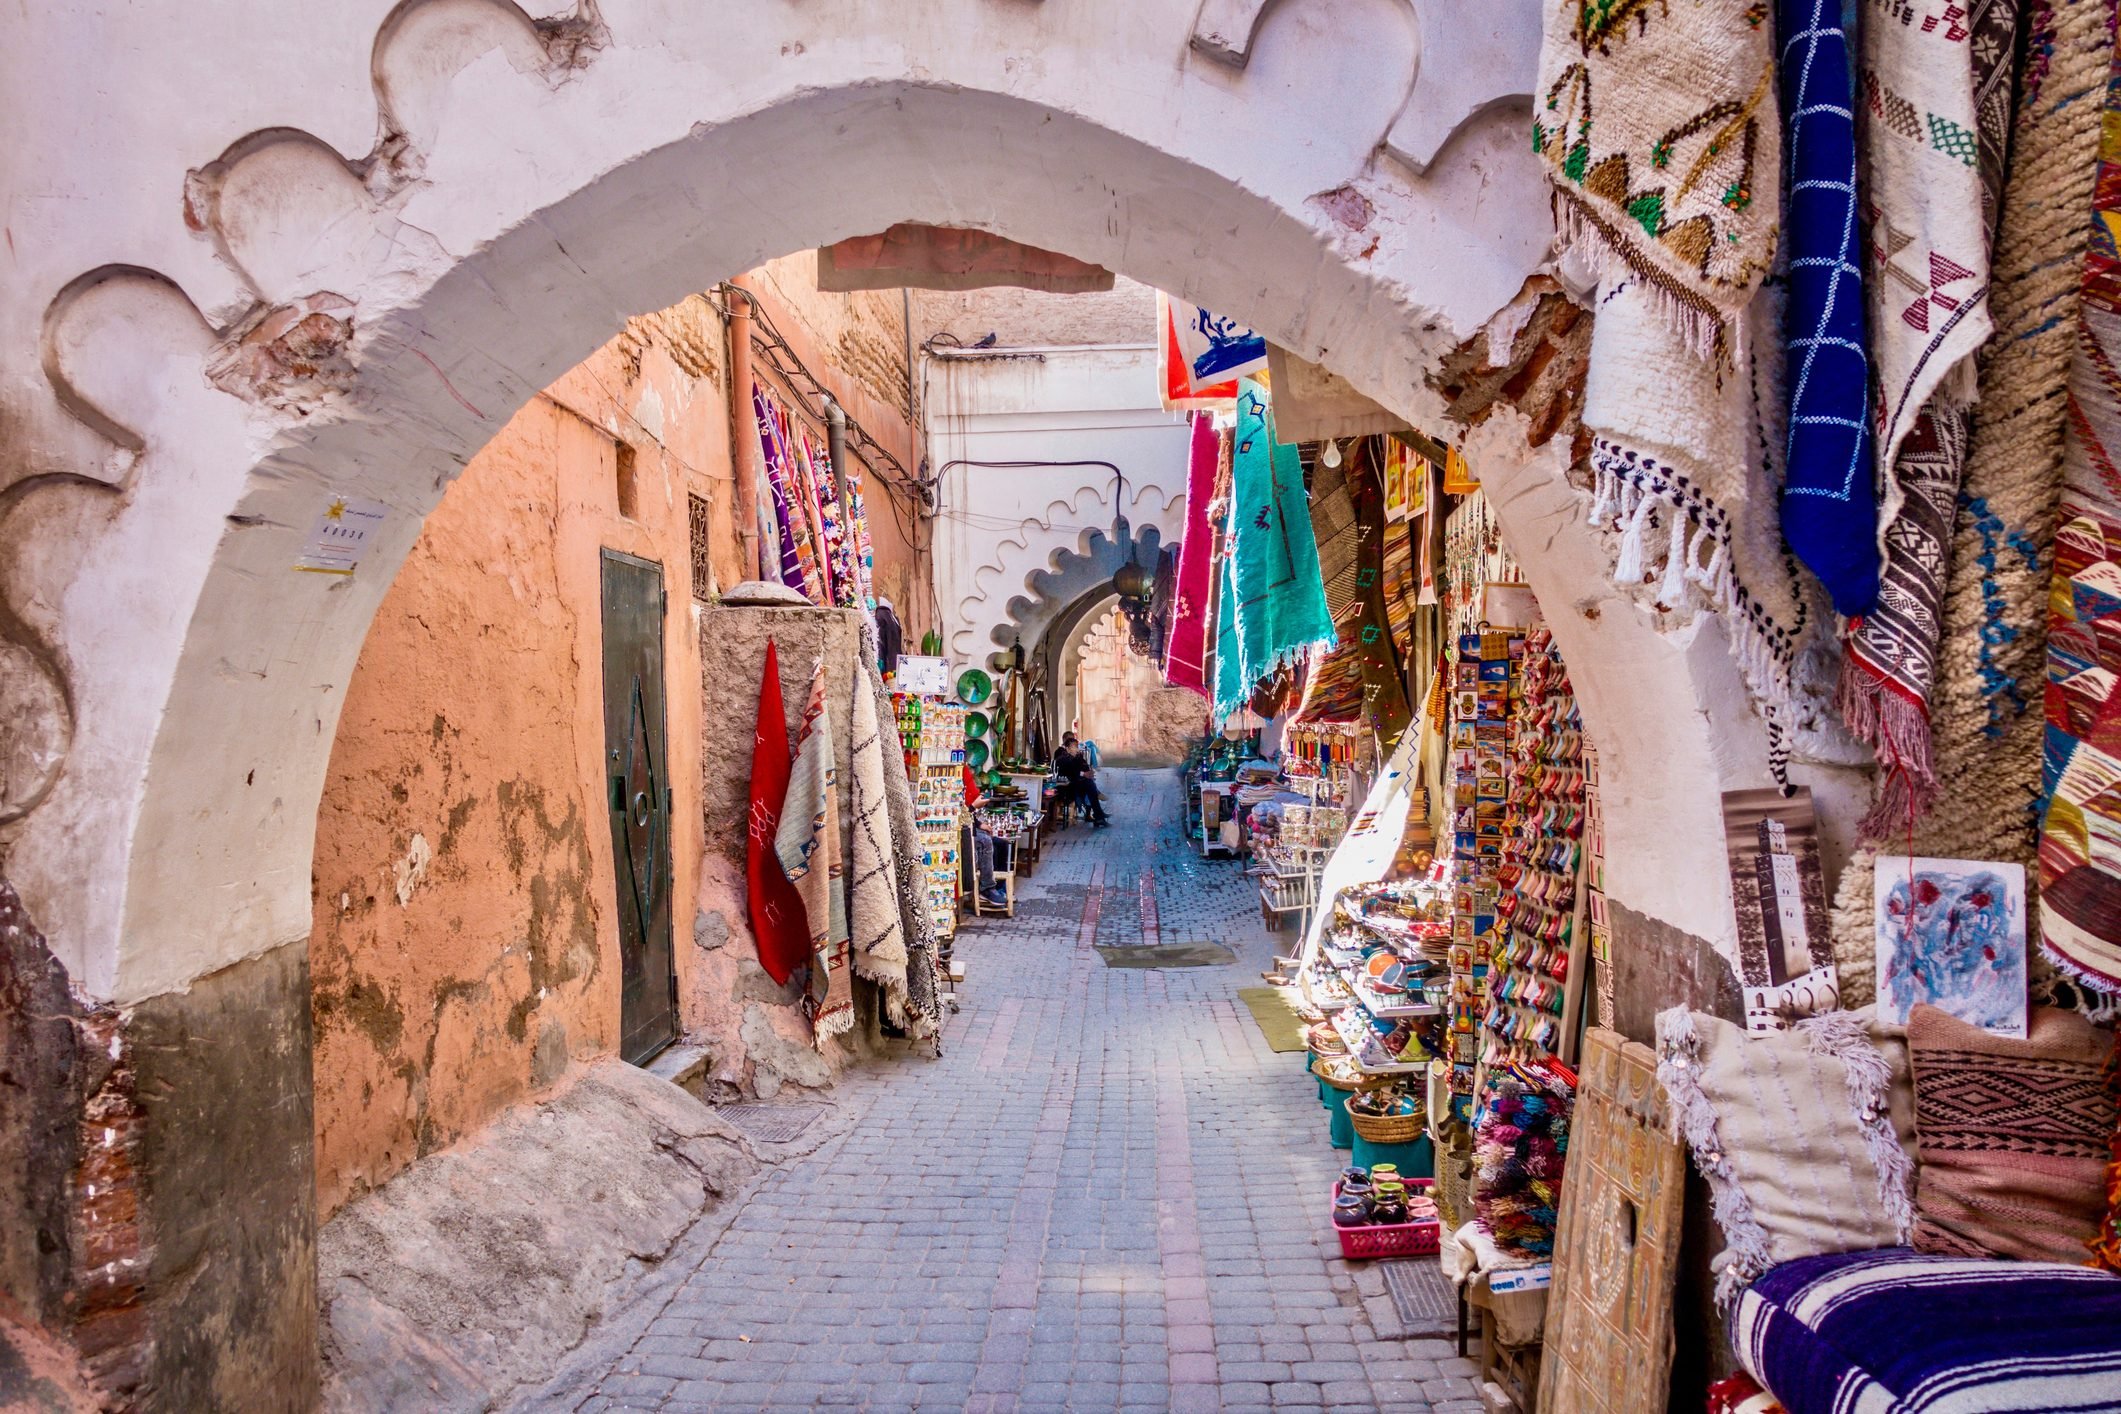 Walking though the souks in Marrakech's medina